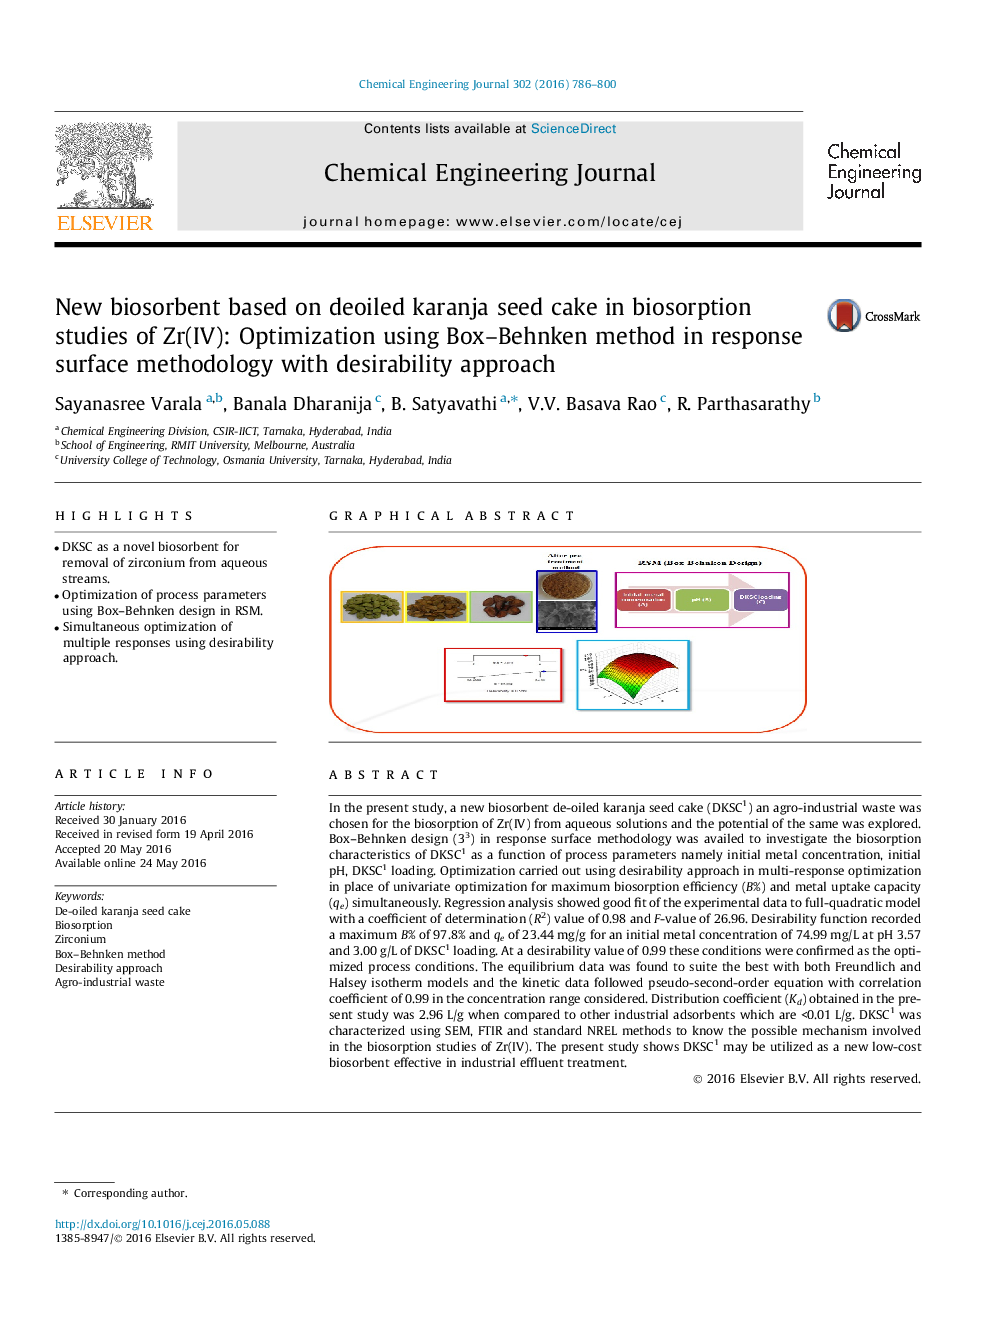 New biosorbent based on deoiled karanja seed cake in biosorption studies of Zr(IV): Optimization using Box–Behnken method in response surface methodology with desirability approach